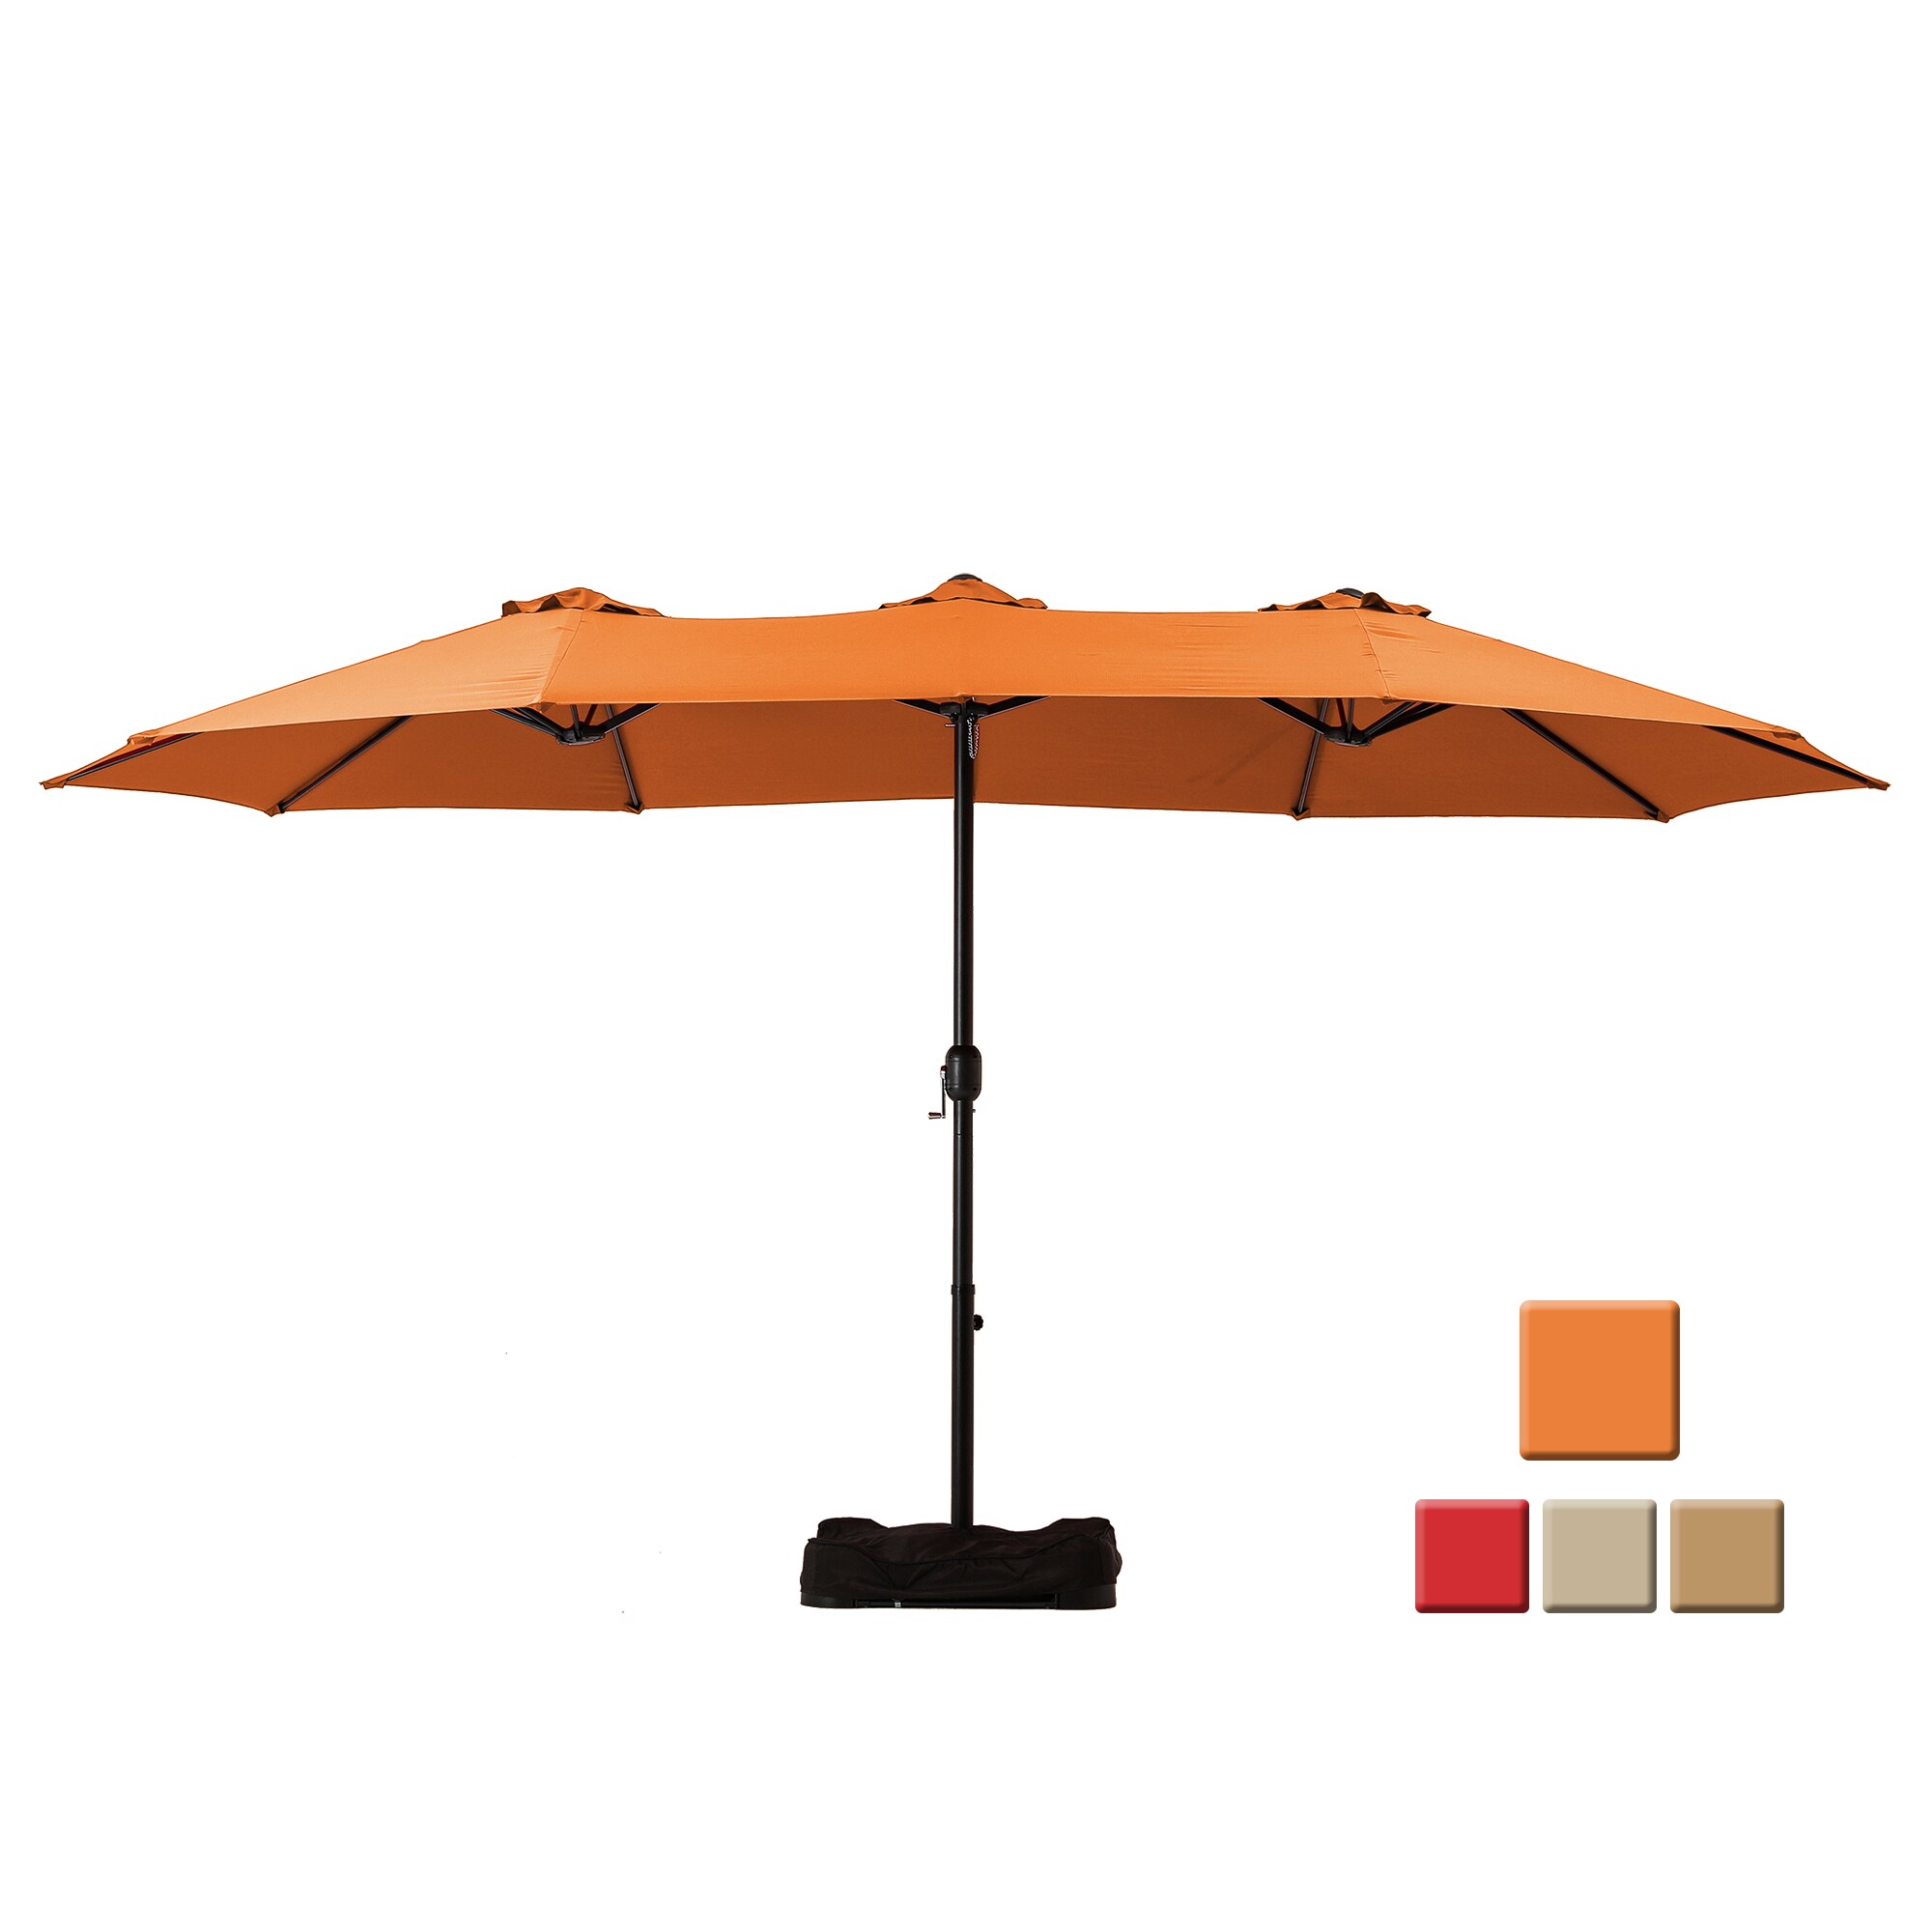 Clihome 15-ft Orange No-tilt Patio Umbrella with Base in the Umbrellas department Lowes.com